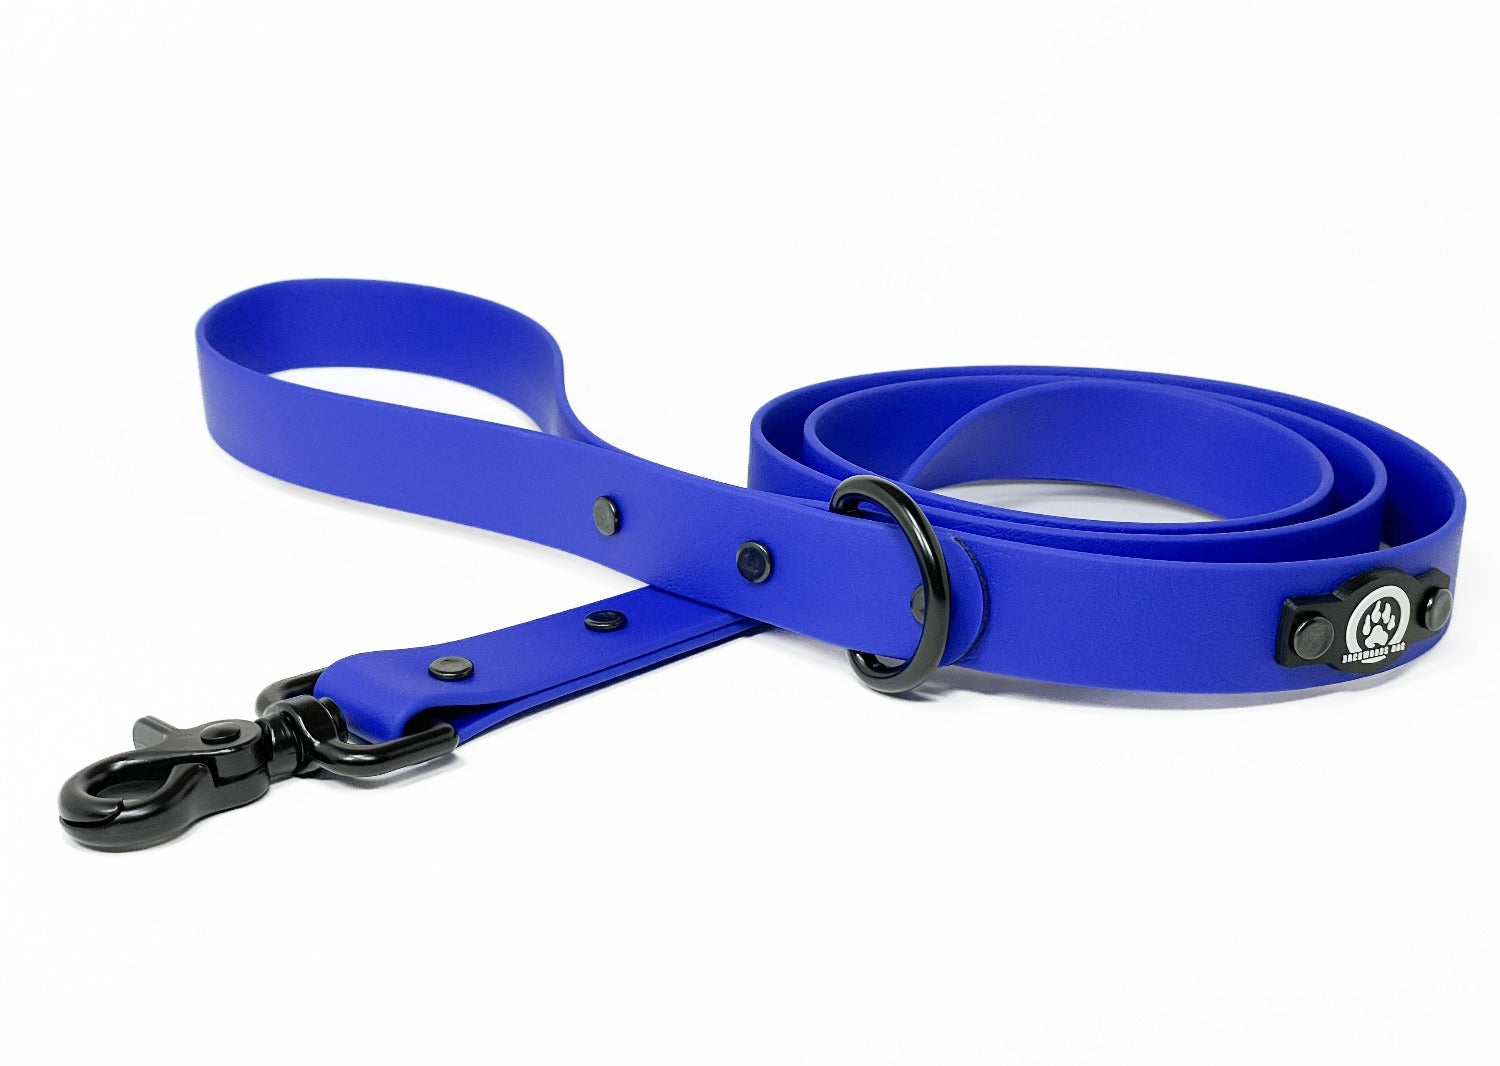 Biothane Dog Leash, Best Dog Leash and collar Set